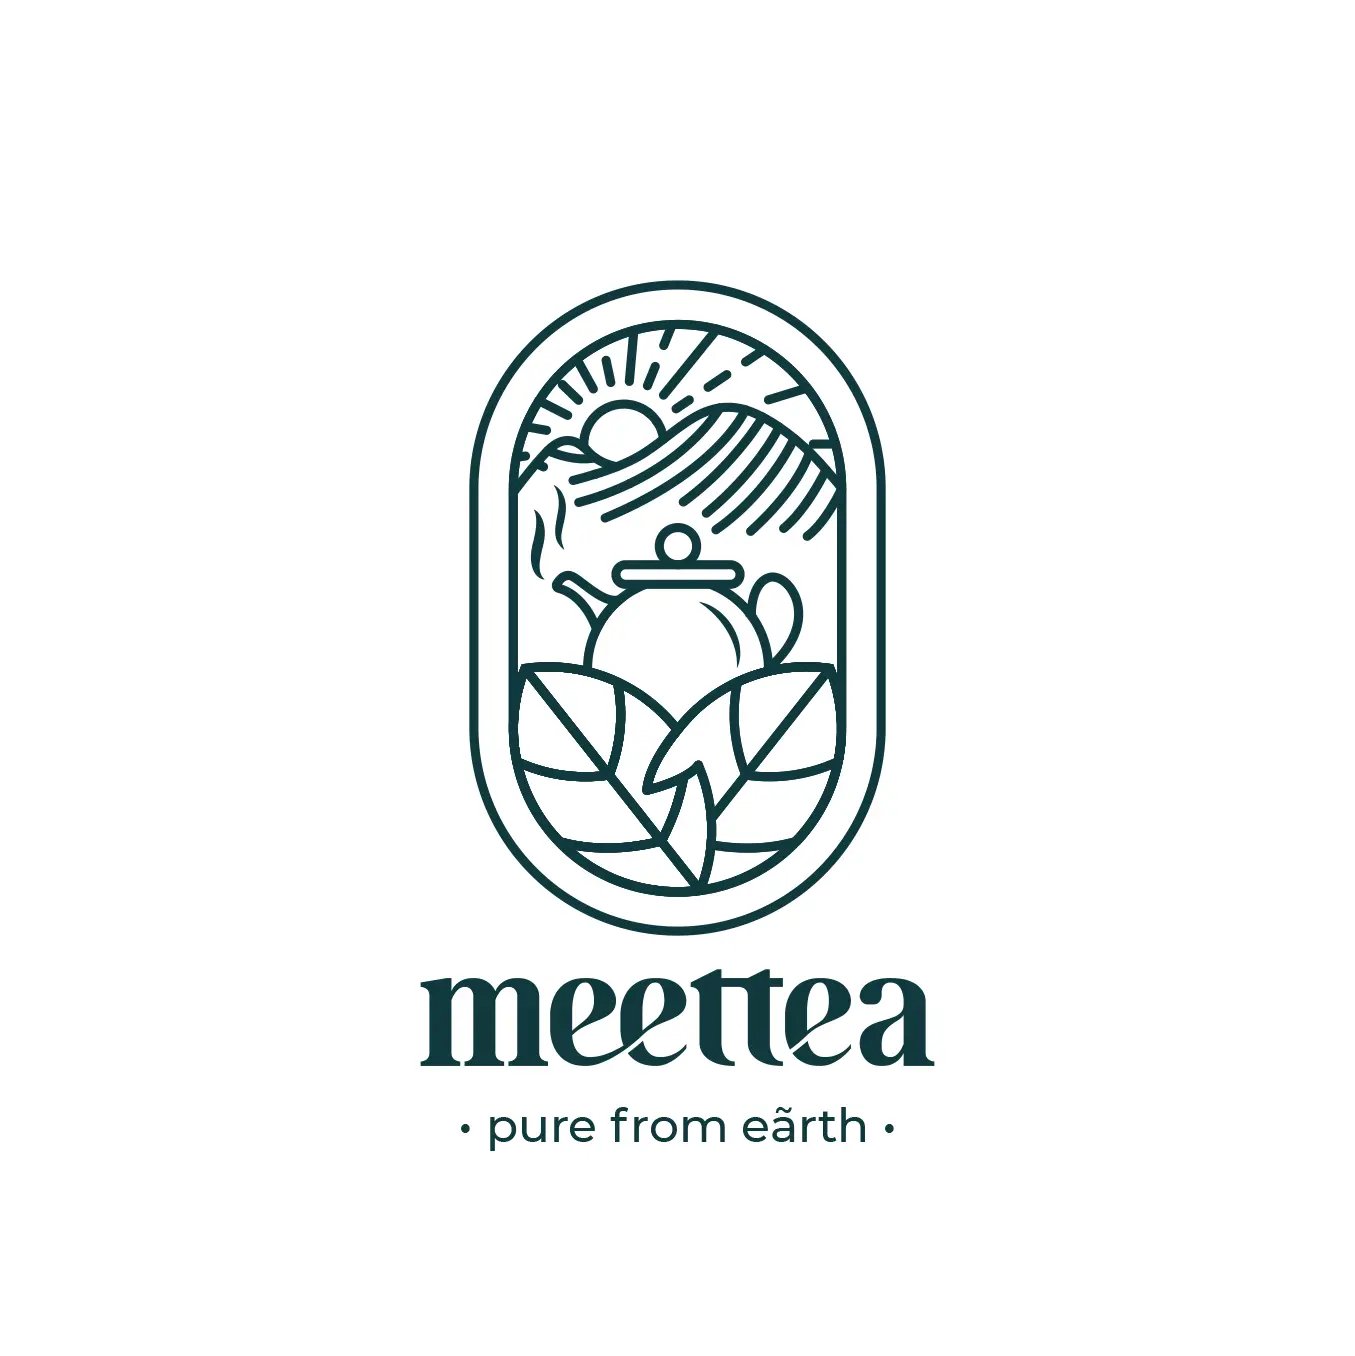 Thiết kế logo trà meettea